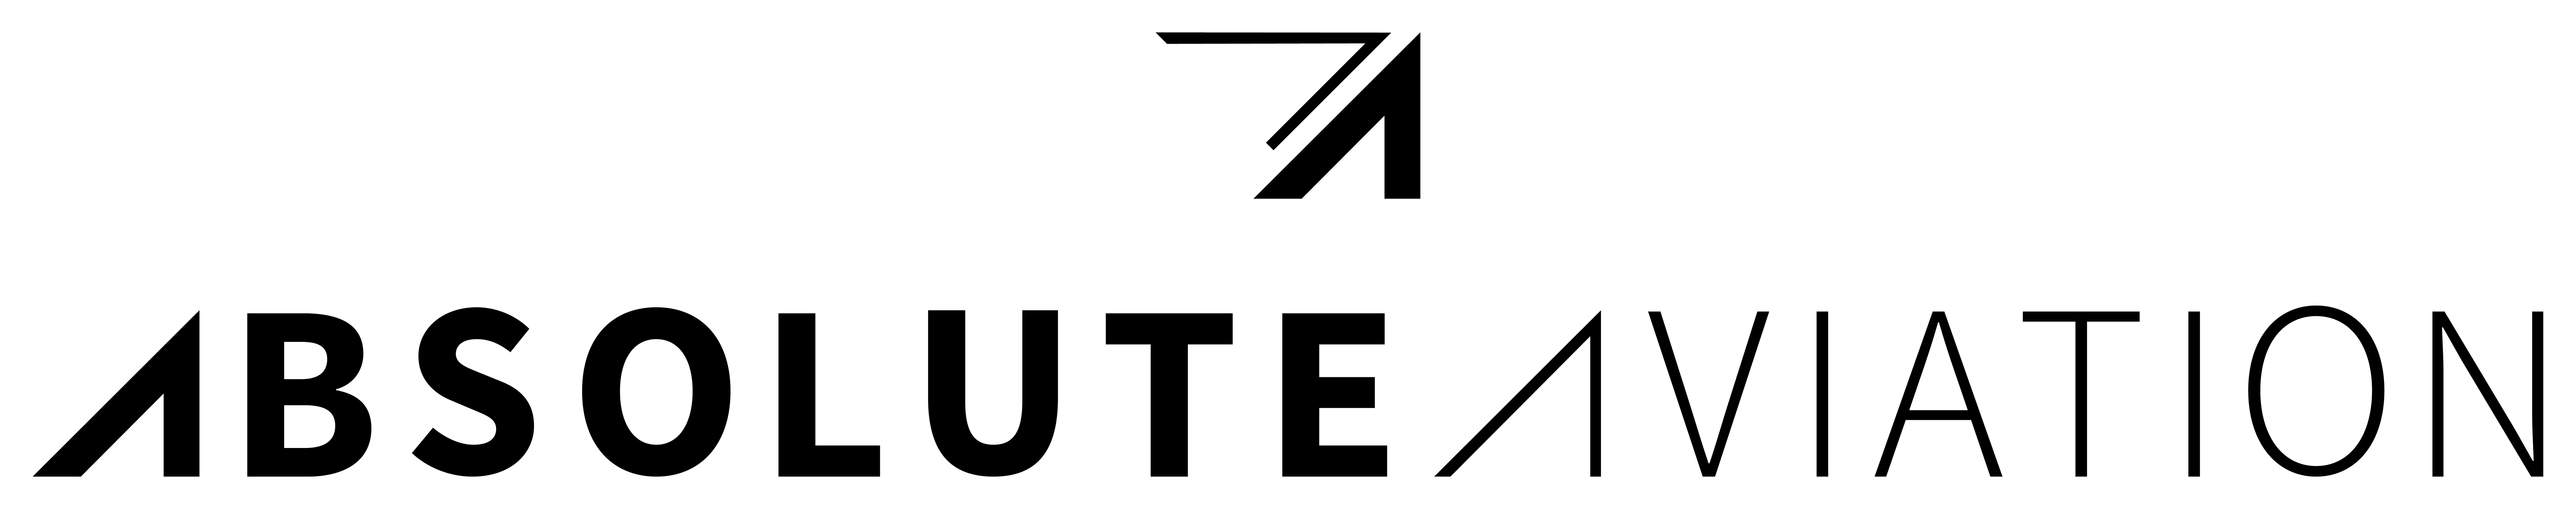 AAG_main_logo (002)